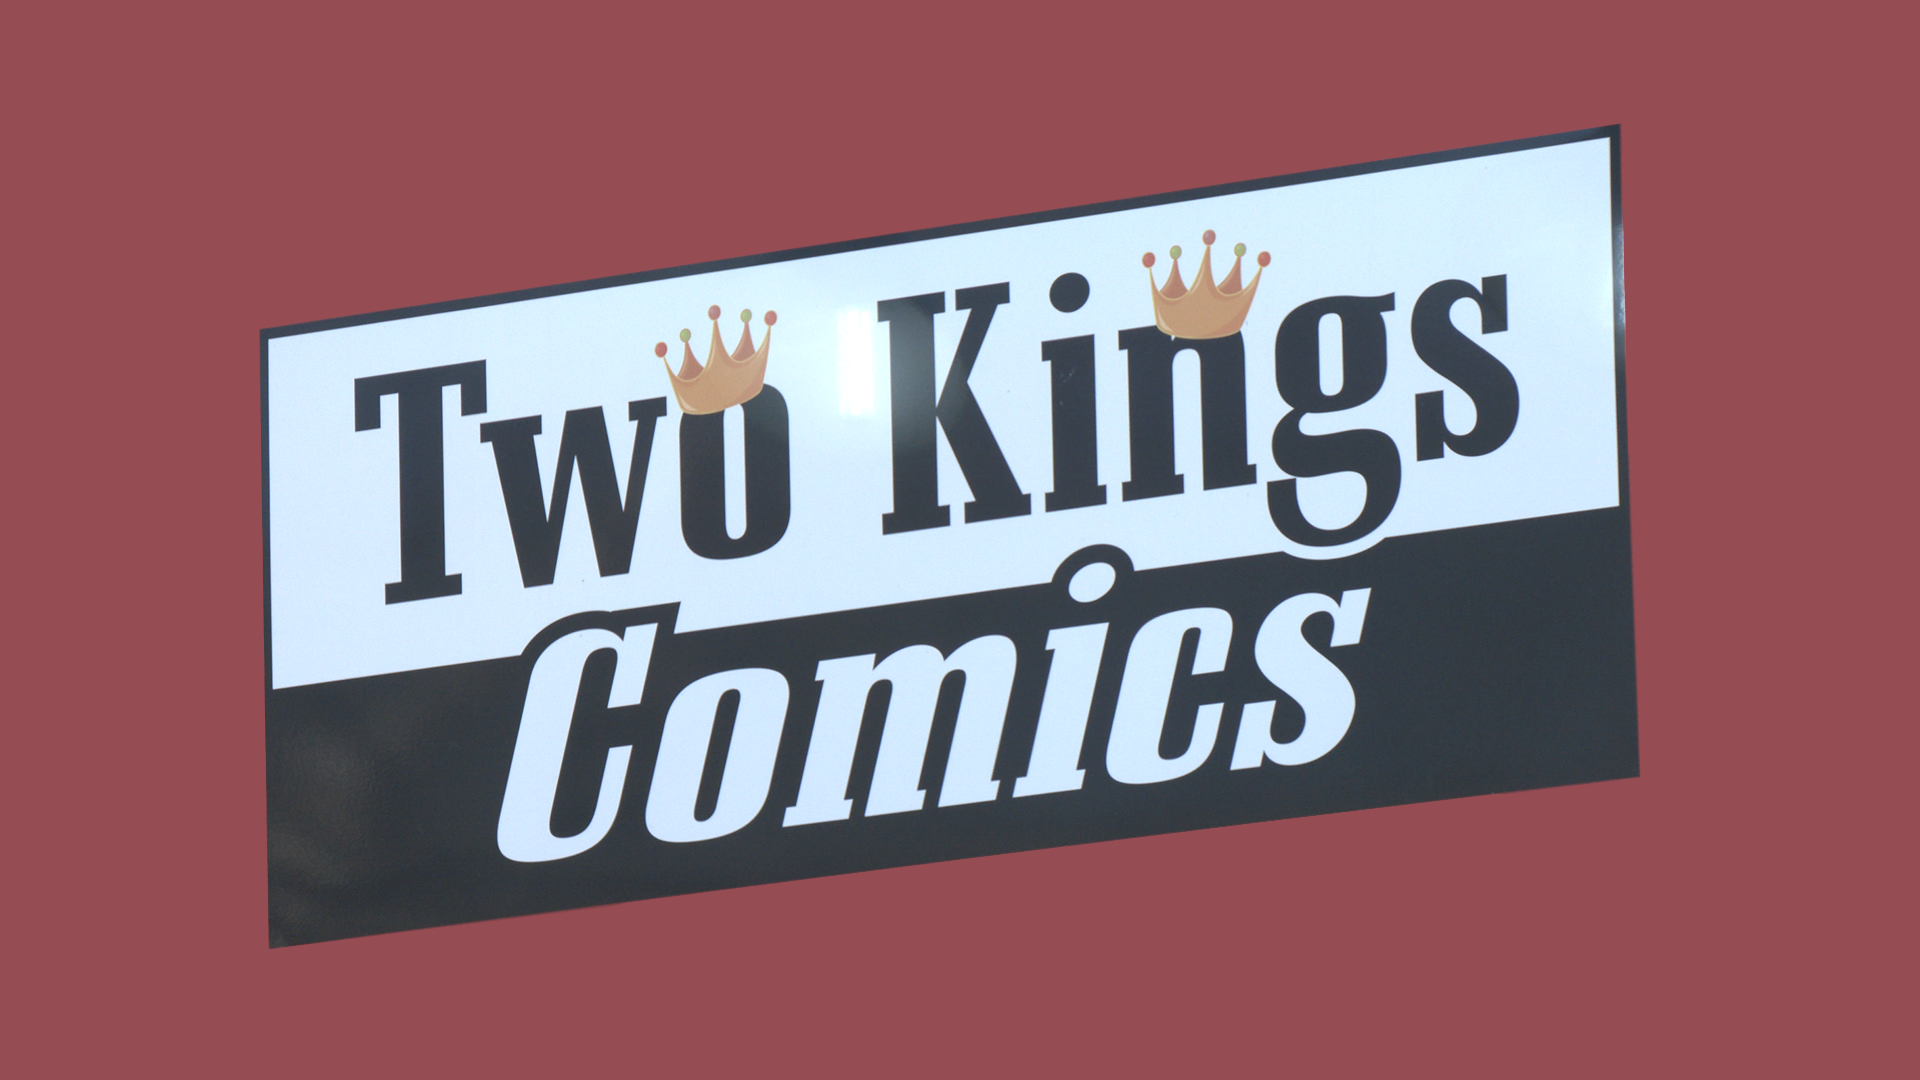 Two Kings Comics